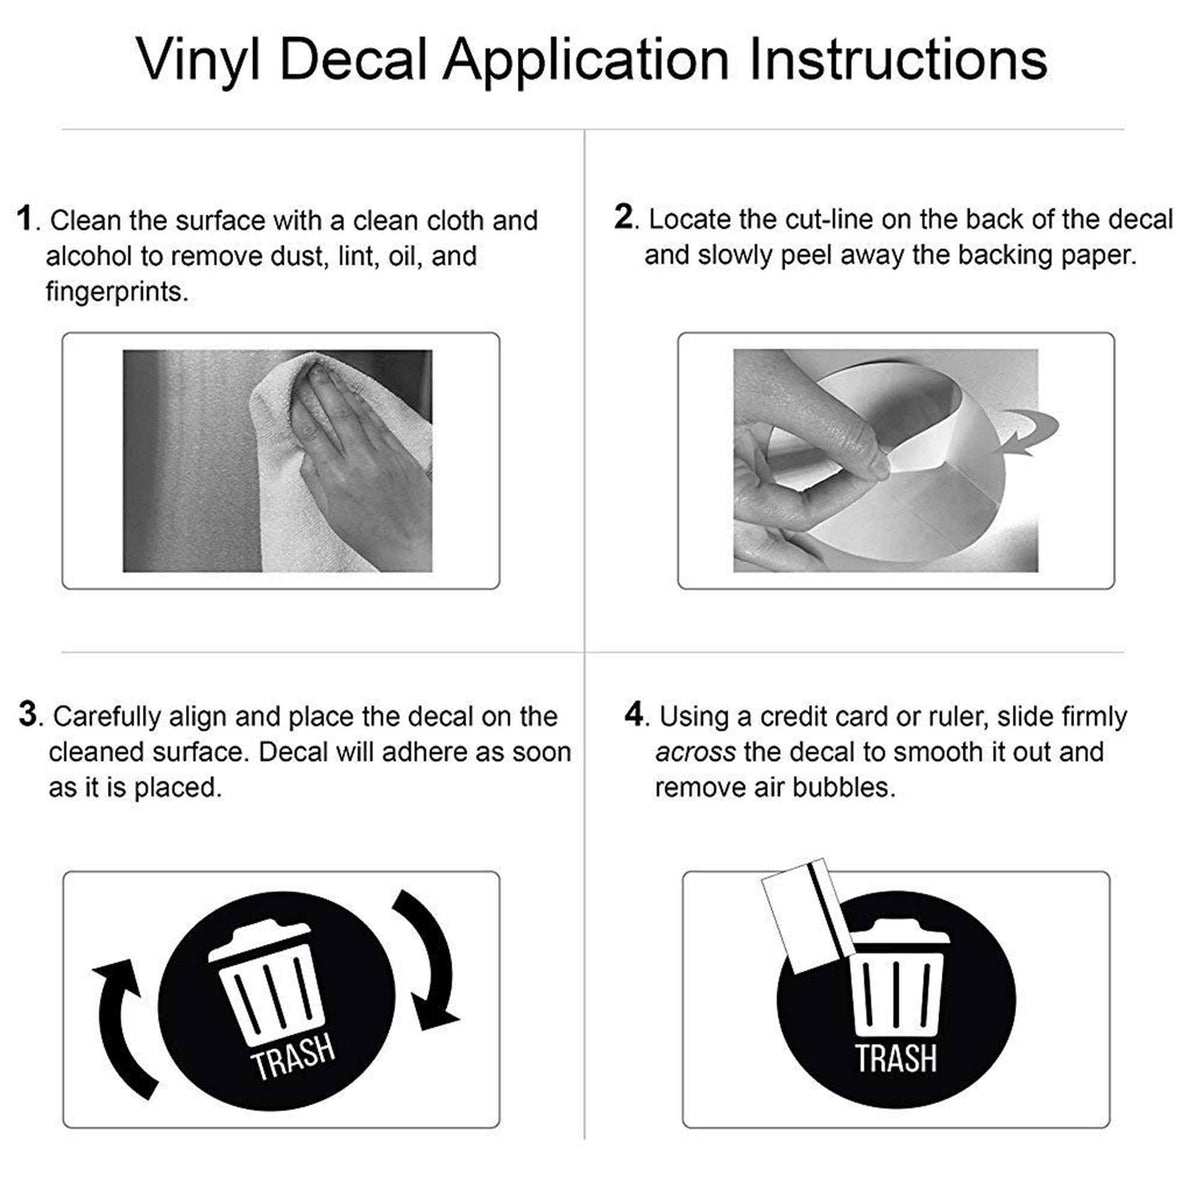 Vinyl Decal Application Instructions